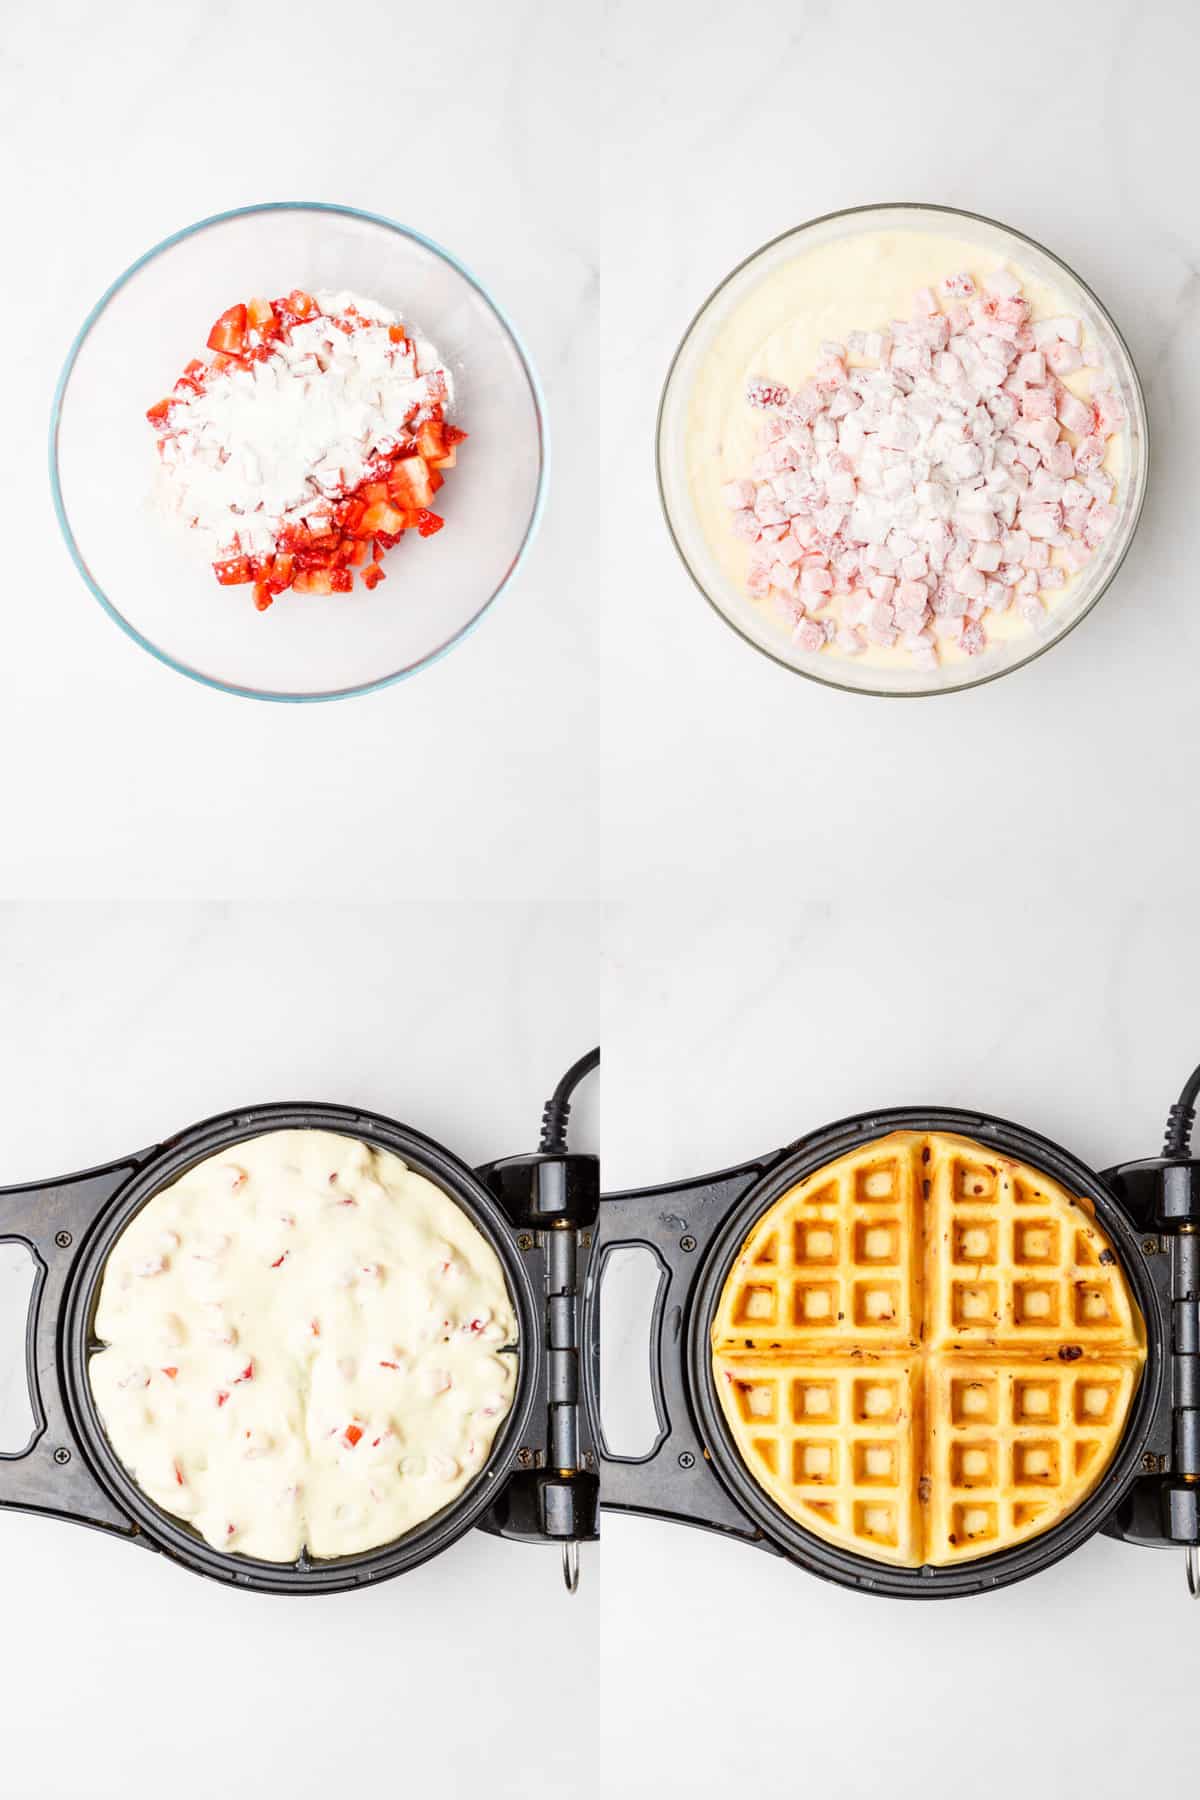 steps to make strawberry waffles